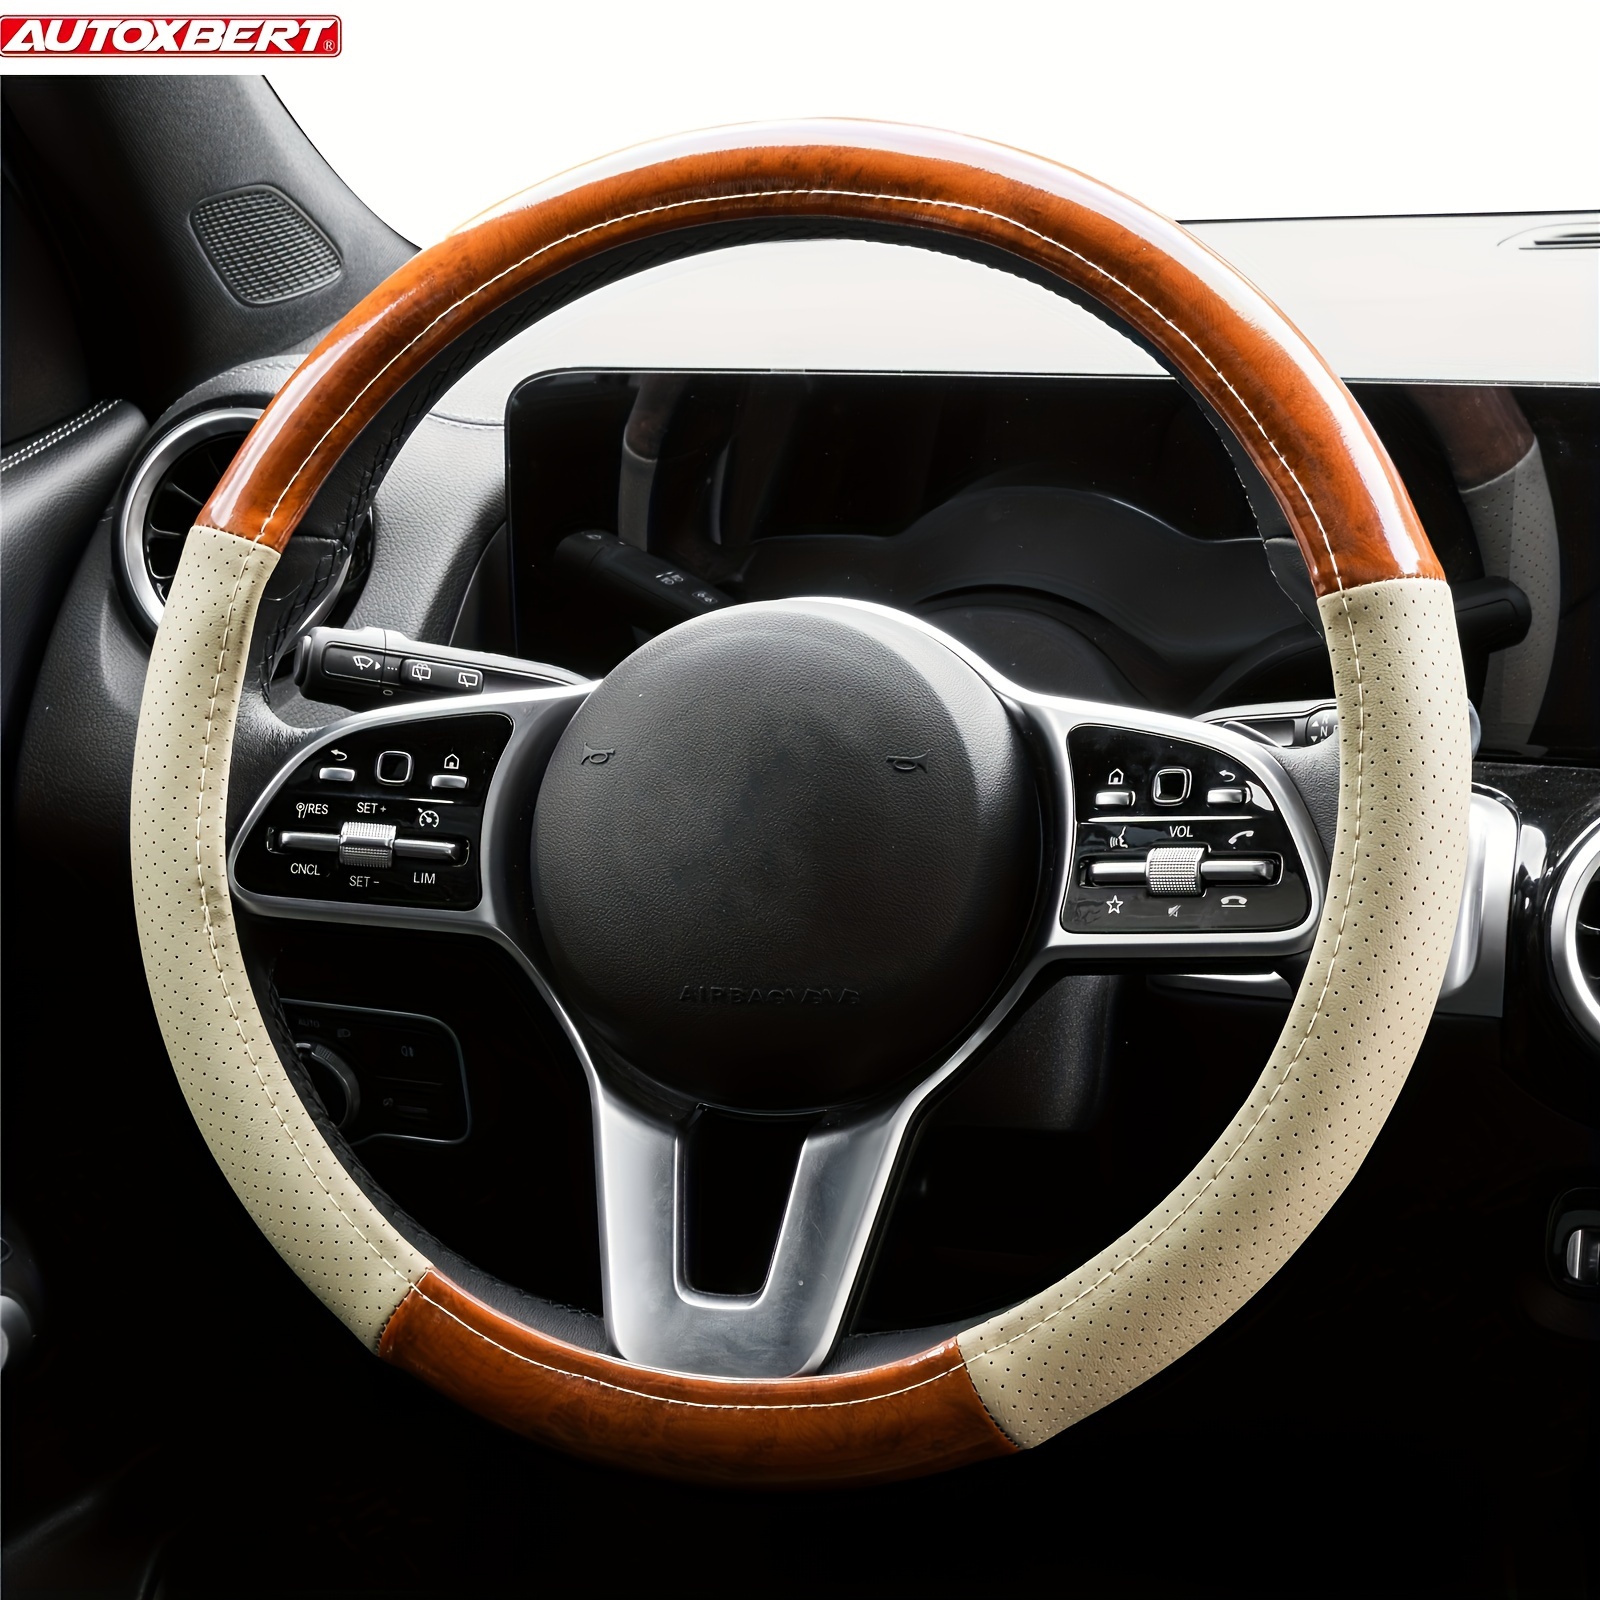 

Car Auto Steering Wheel Cover Wood Grain Mahogany Breathable Non-slip 38cm 15 Inch Universal Interior Car Accessories